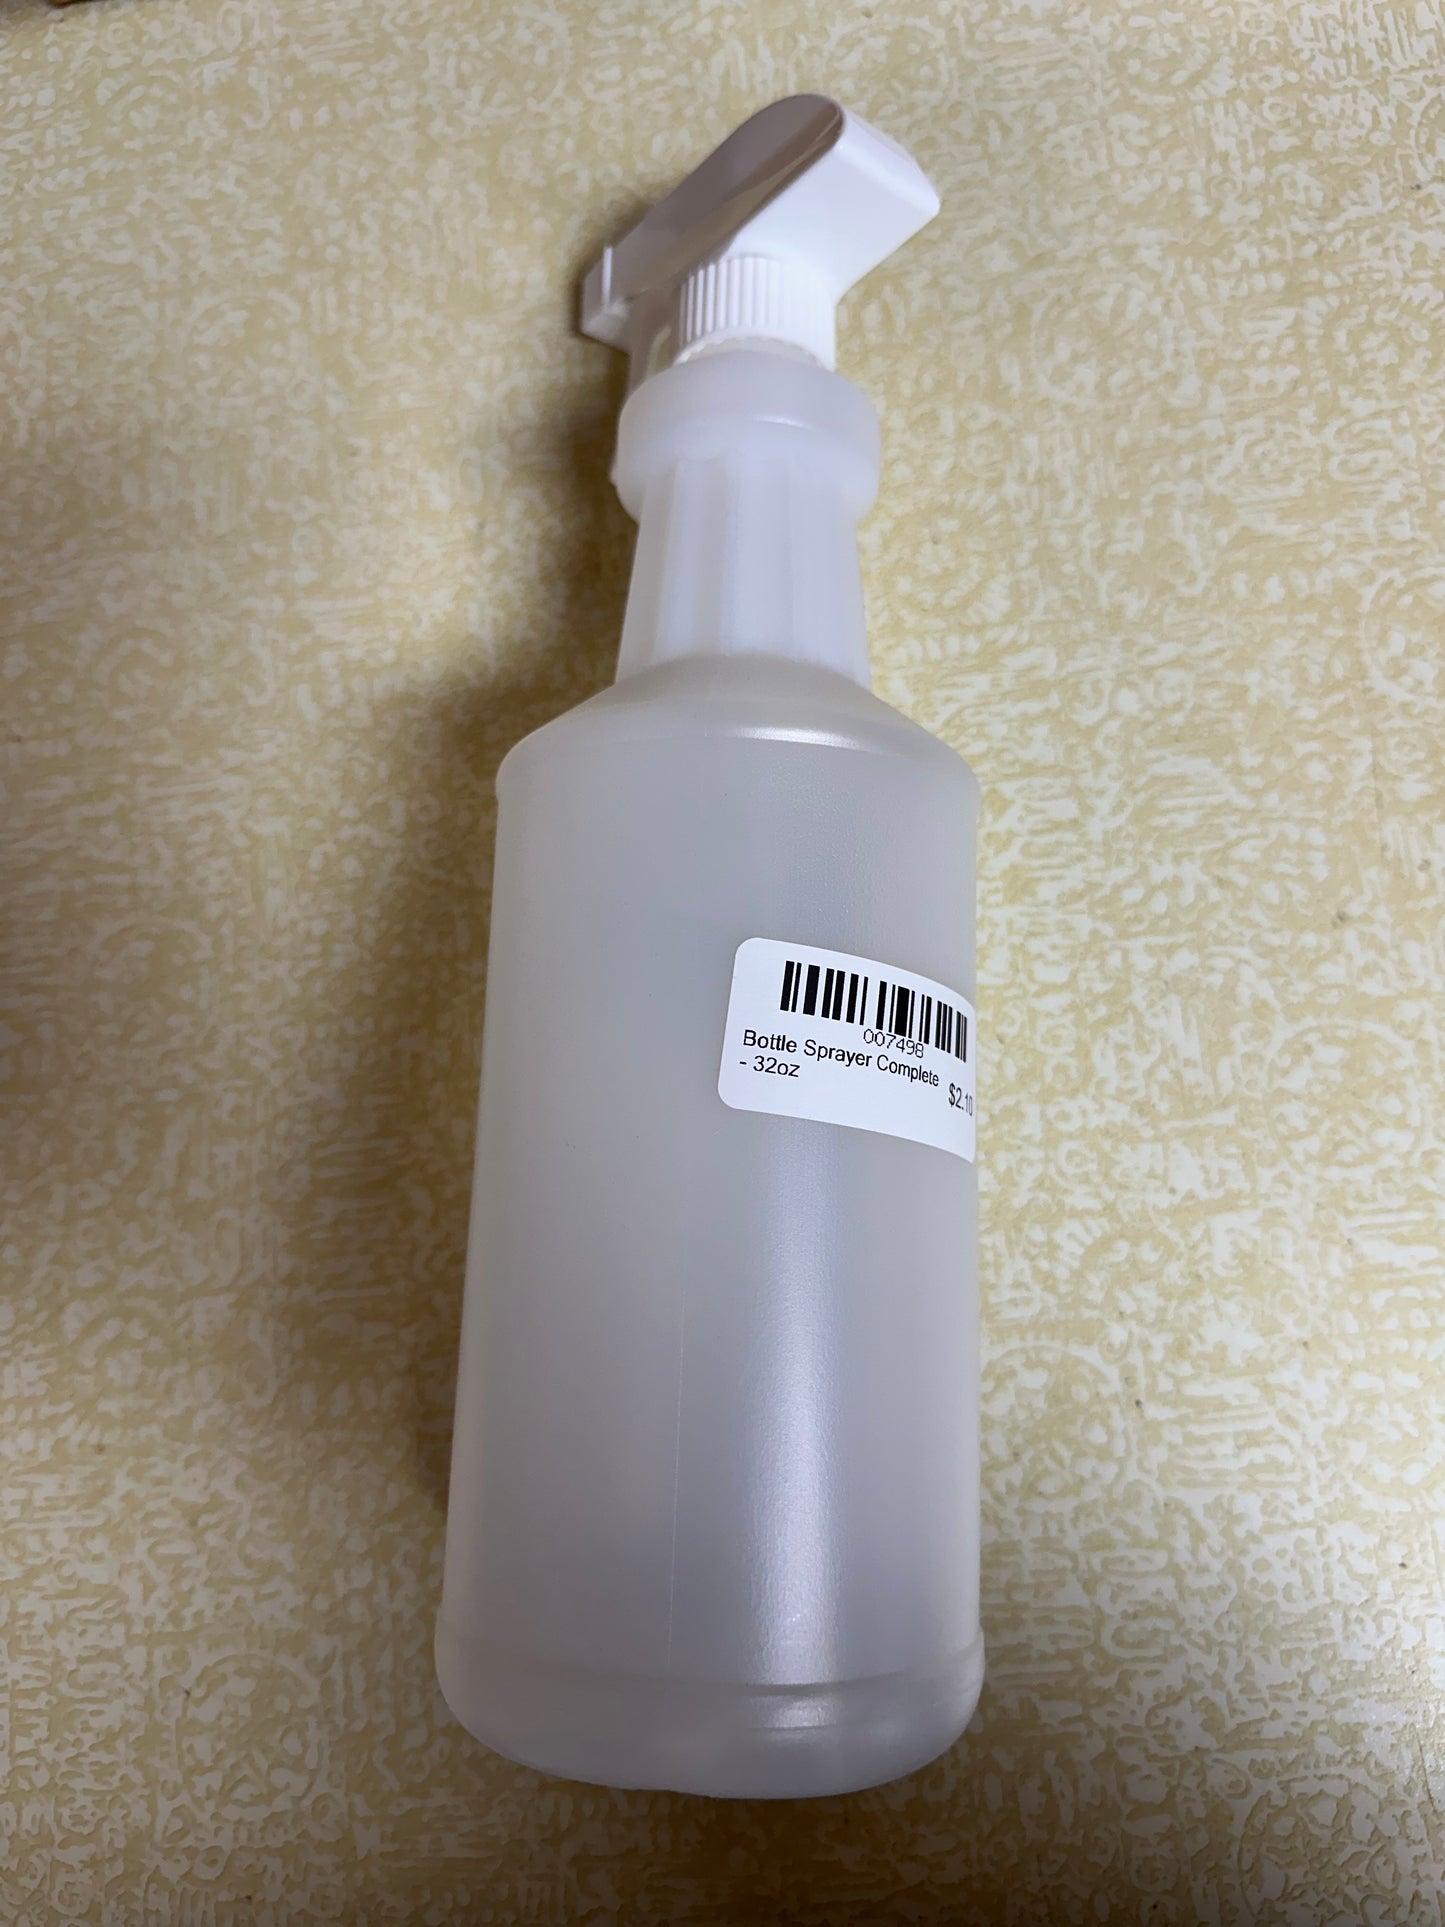 Bottle Sprayer Complete - 32oz